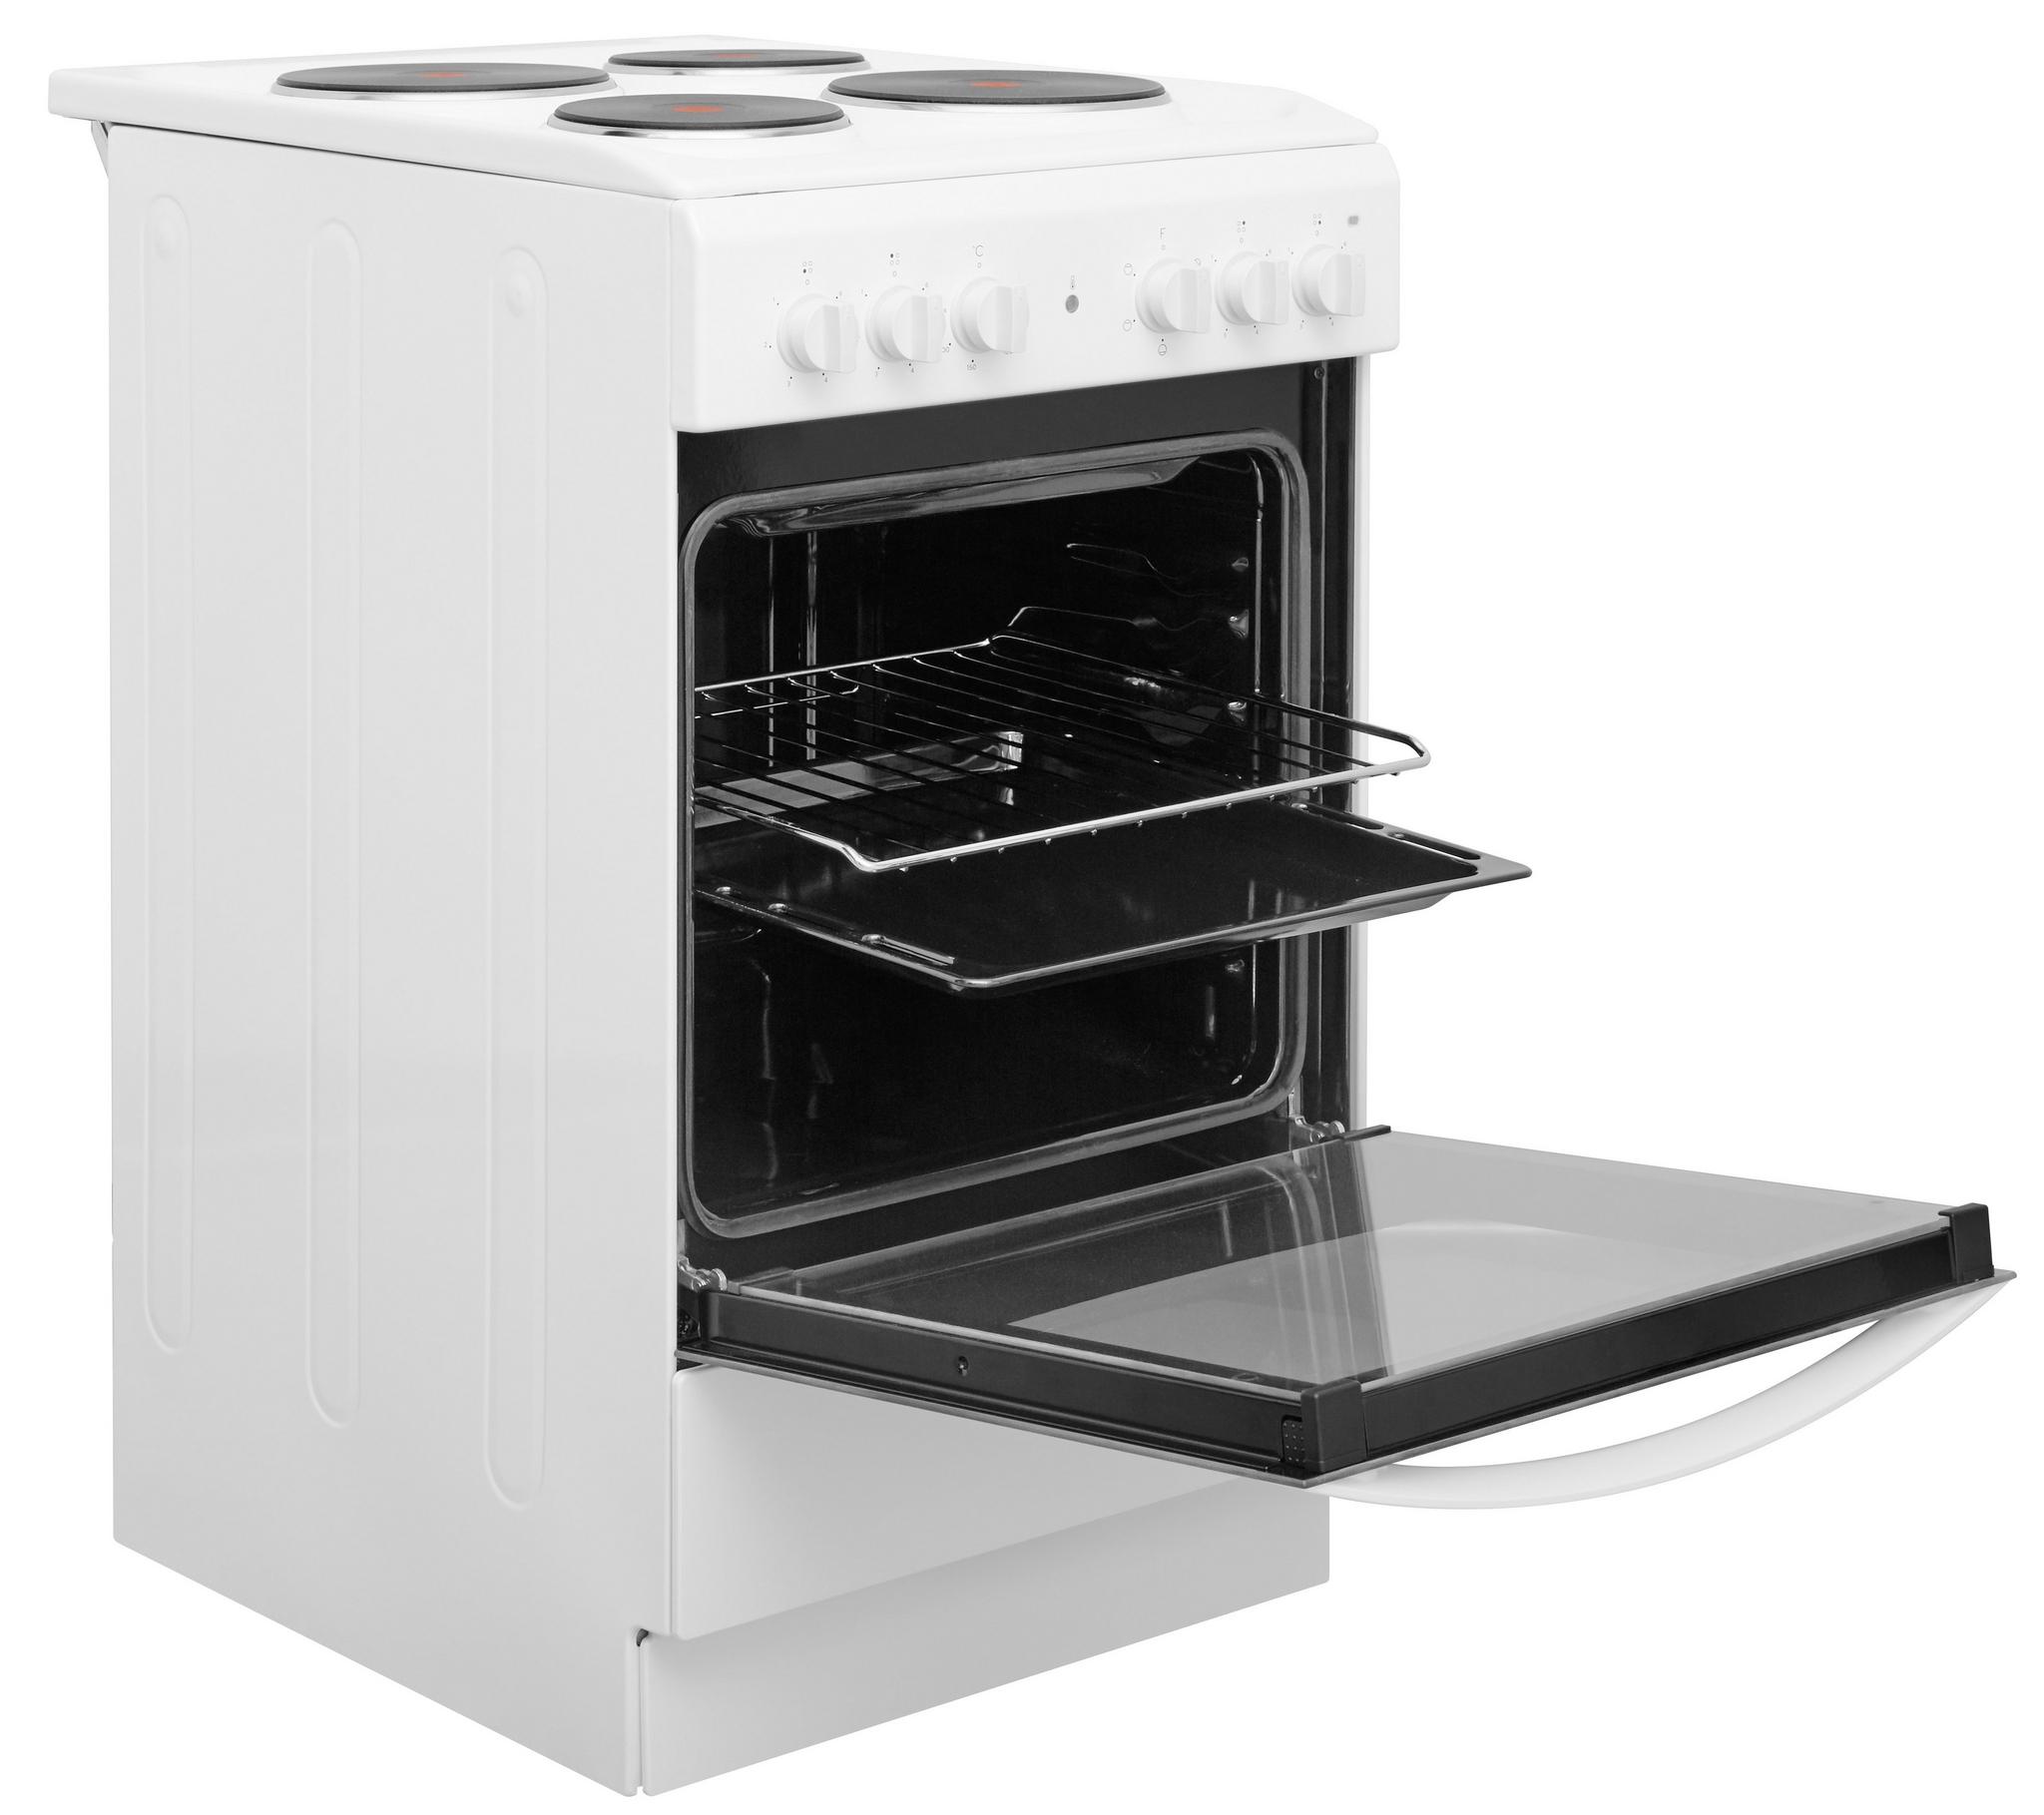 Indesit 50x60 cm 4 burner Ceramic Electric Cooker (I5ESH1E(W)/EX) – White